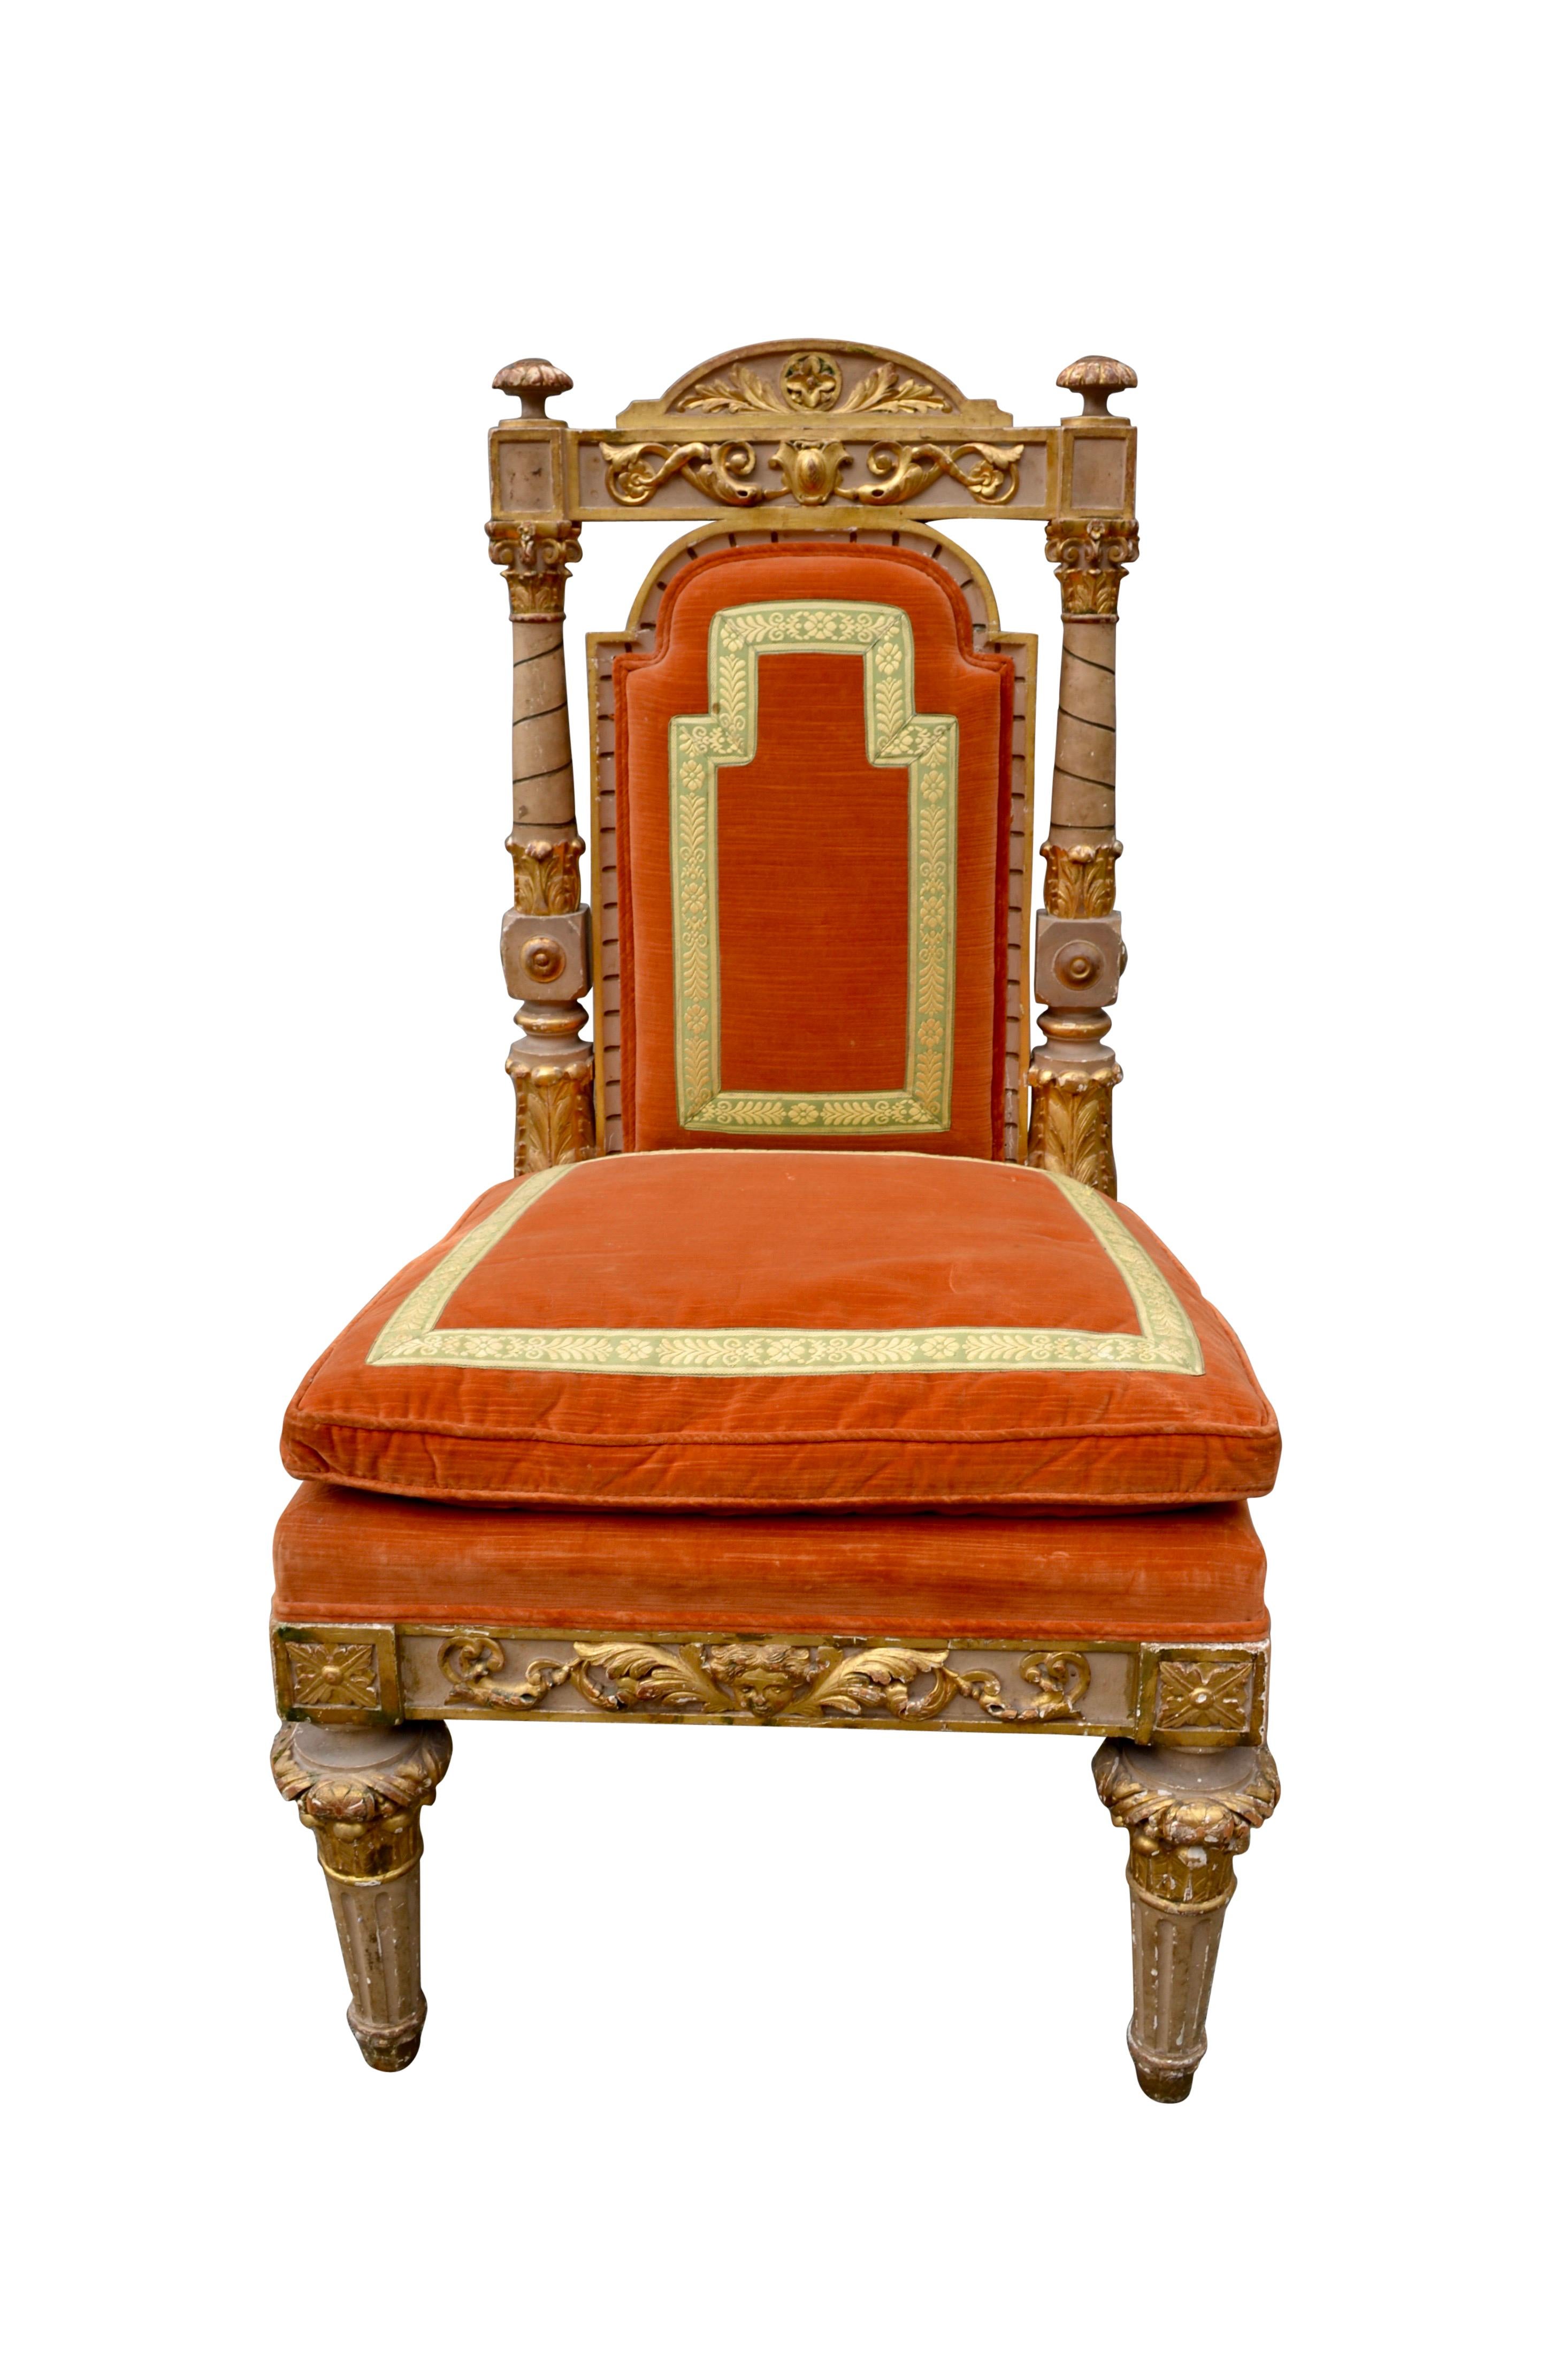 Renaissance Revival 18th C Italian Piedmontese Carved Gilded Chair For Sale